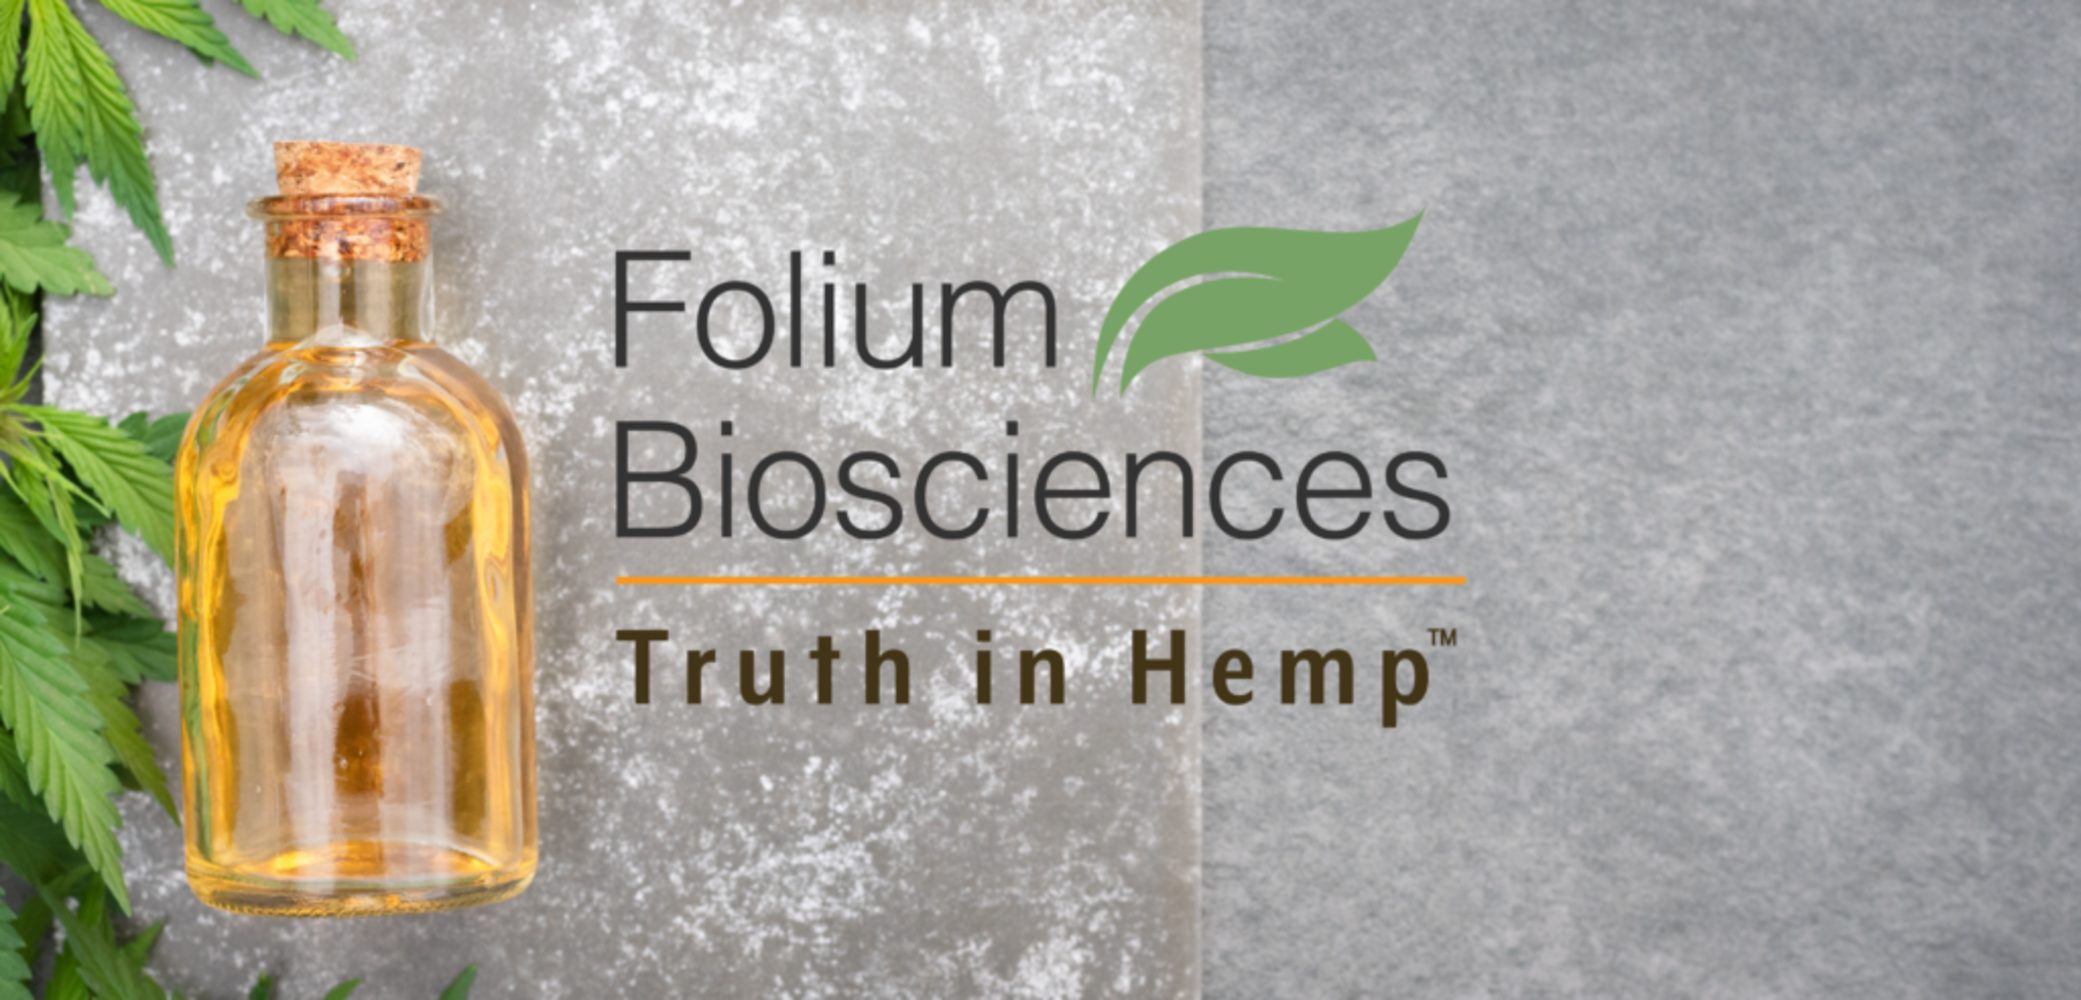 Day 1 - Folium Biosciences: 1200 Lot Cannabis Development, Grow, Harvesting, Processing, Softgel & Packaging Plant, Lab, Rolling Stock & Fleet